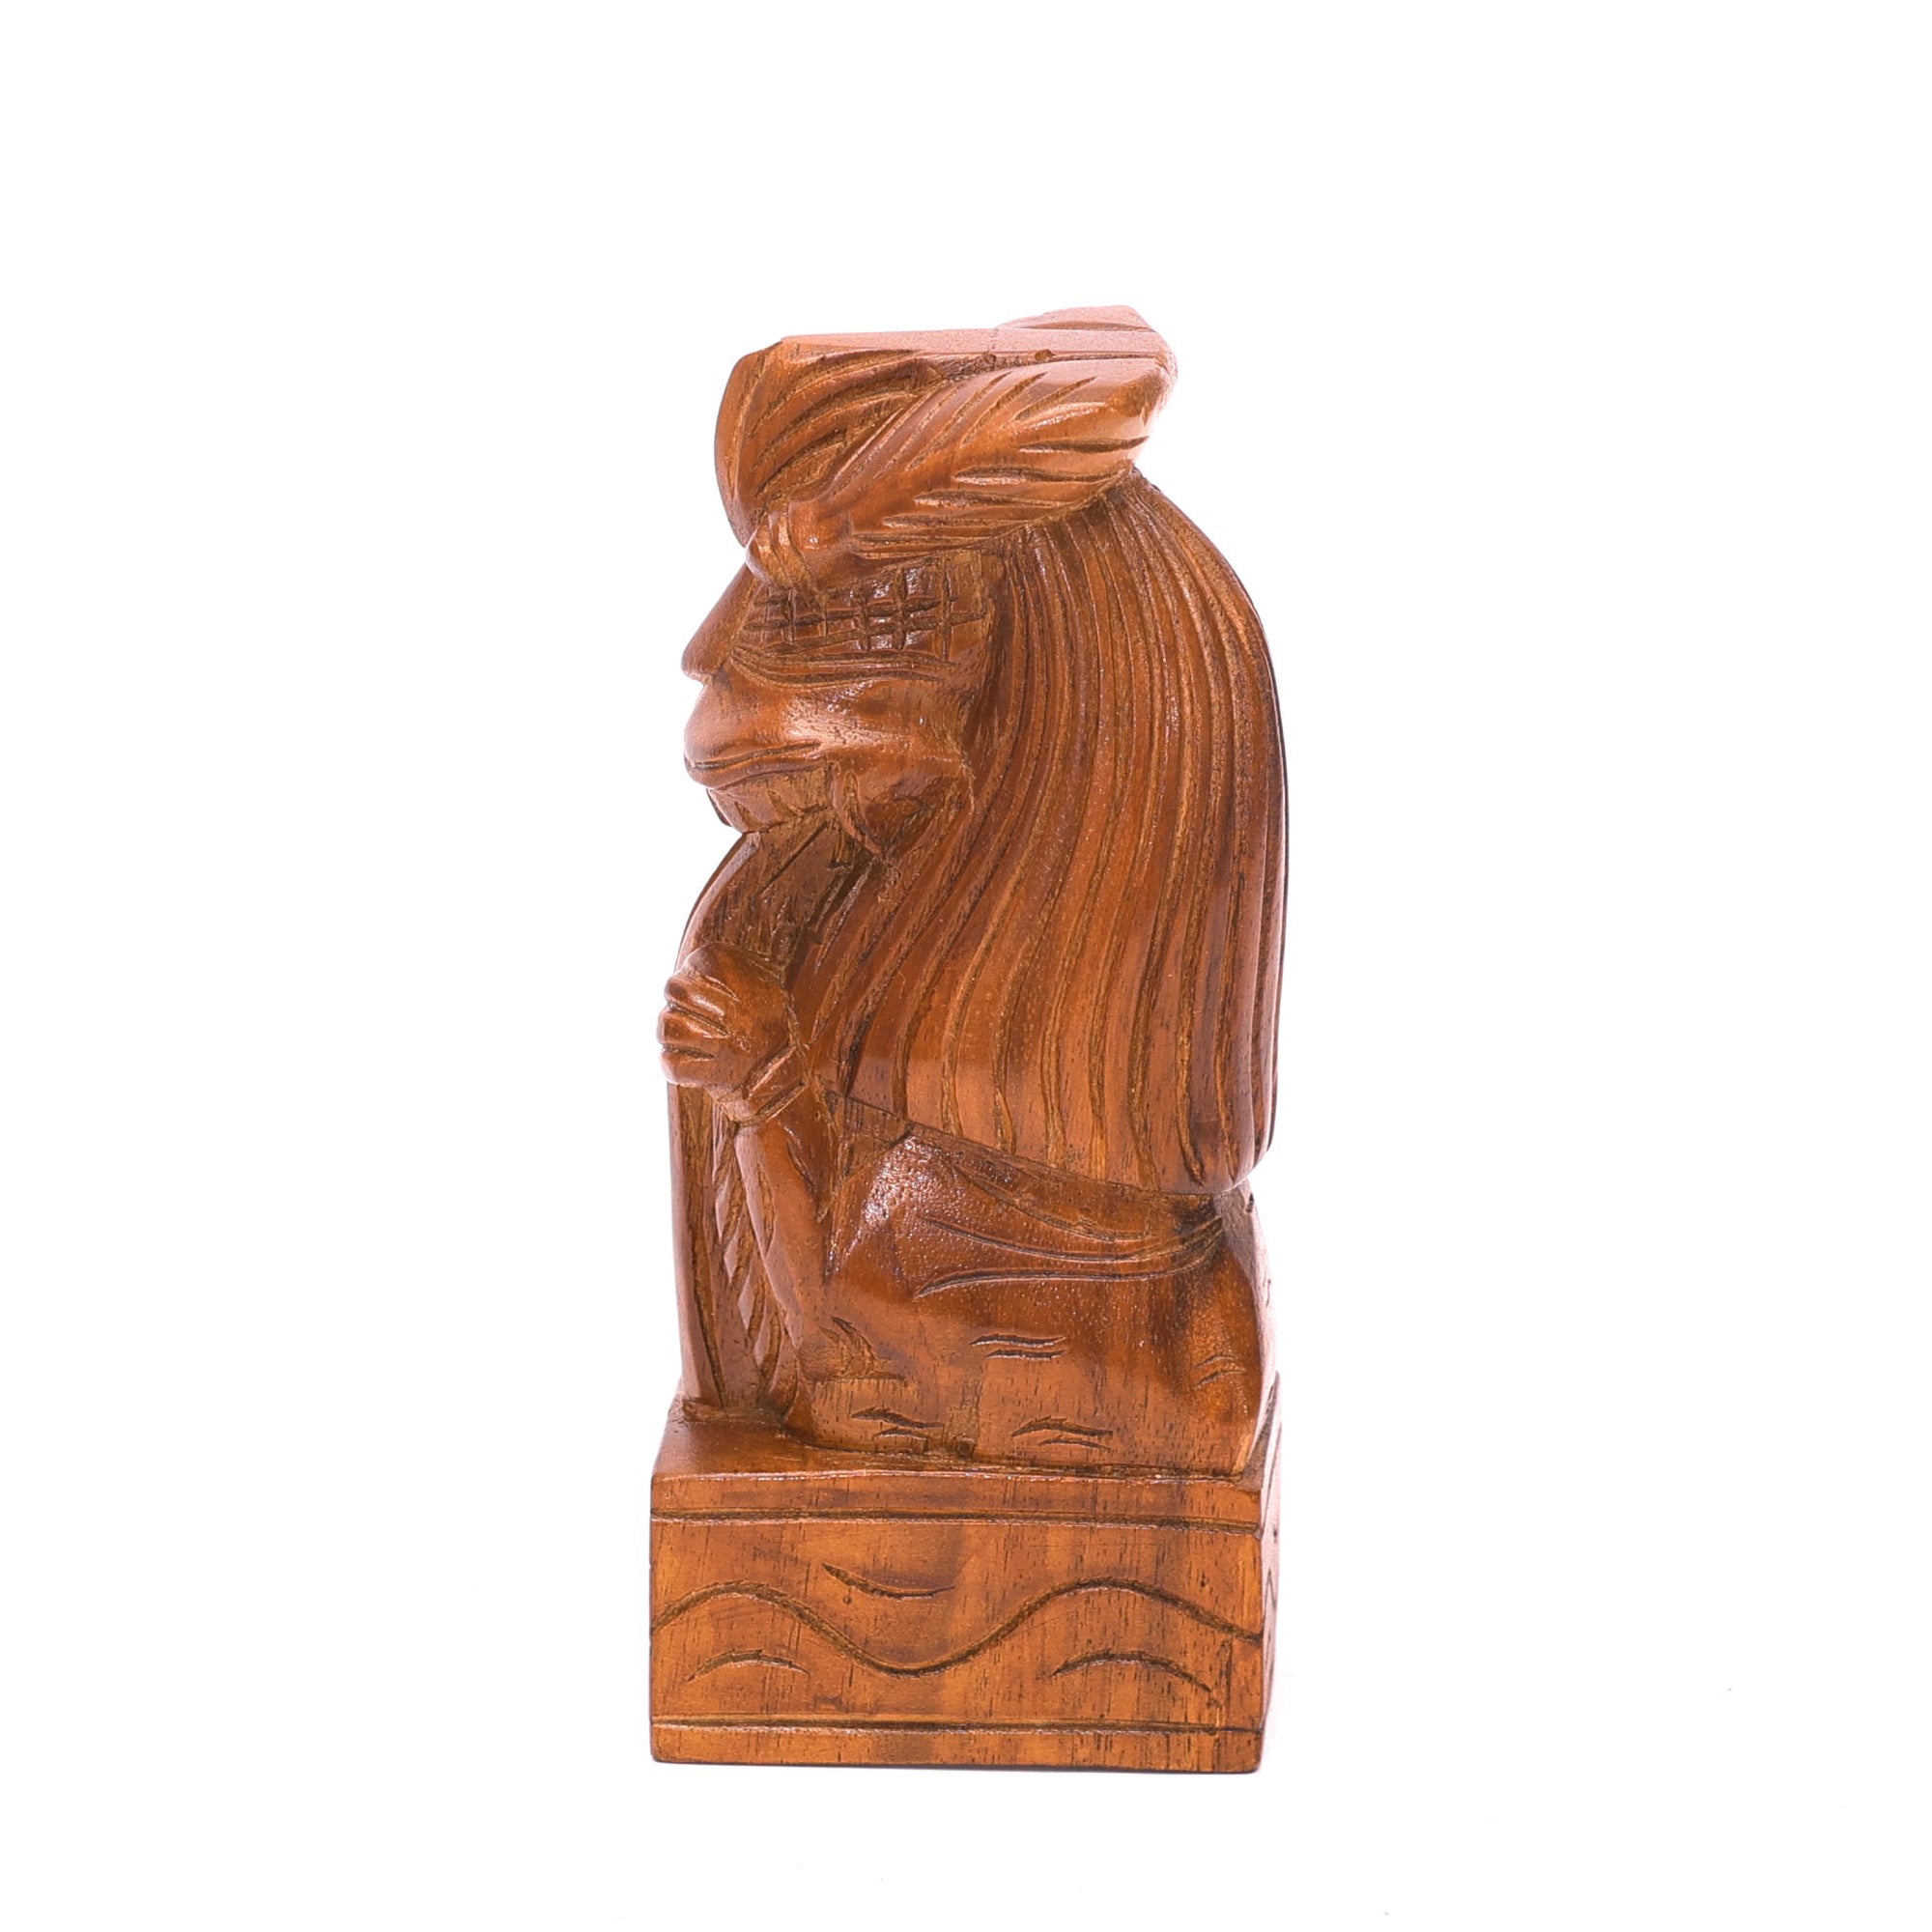 Traditional Carved Animal Guardian Animal Figurine